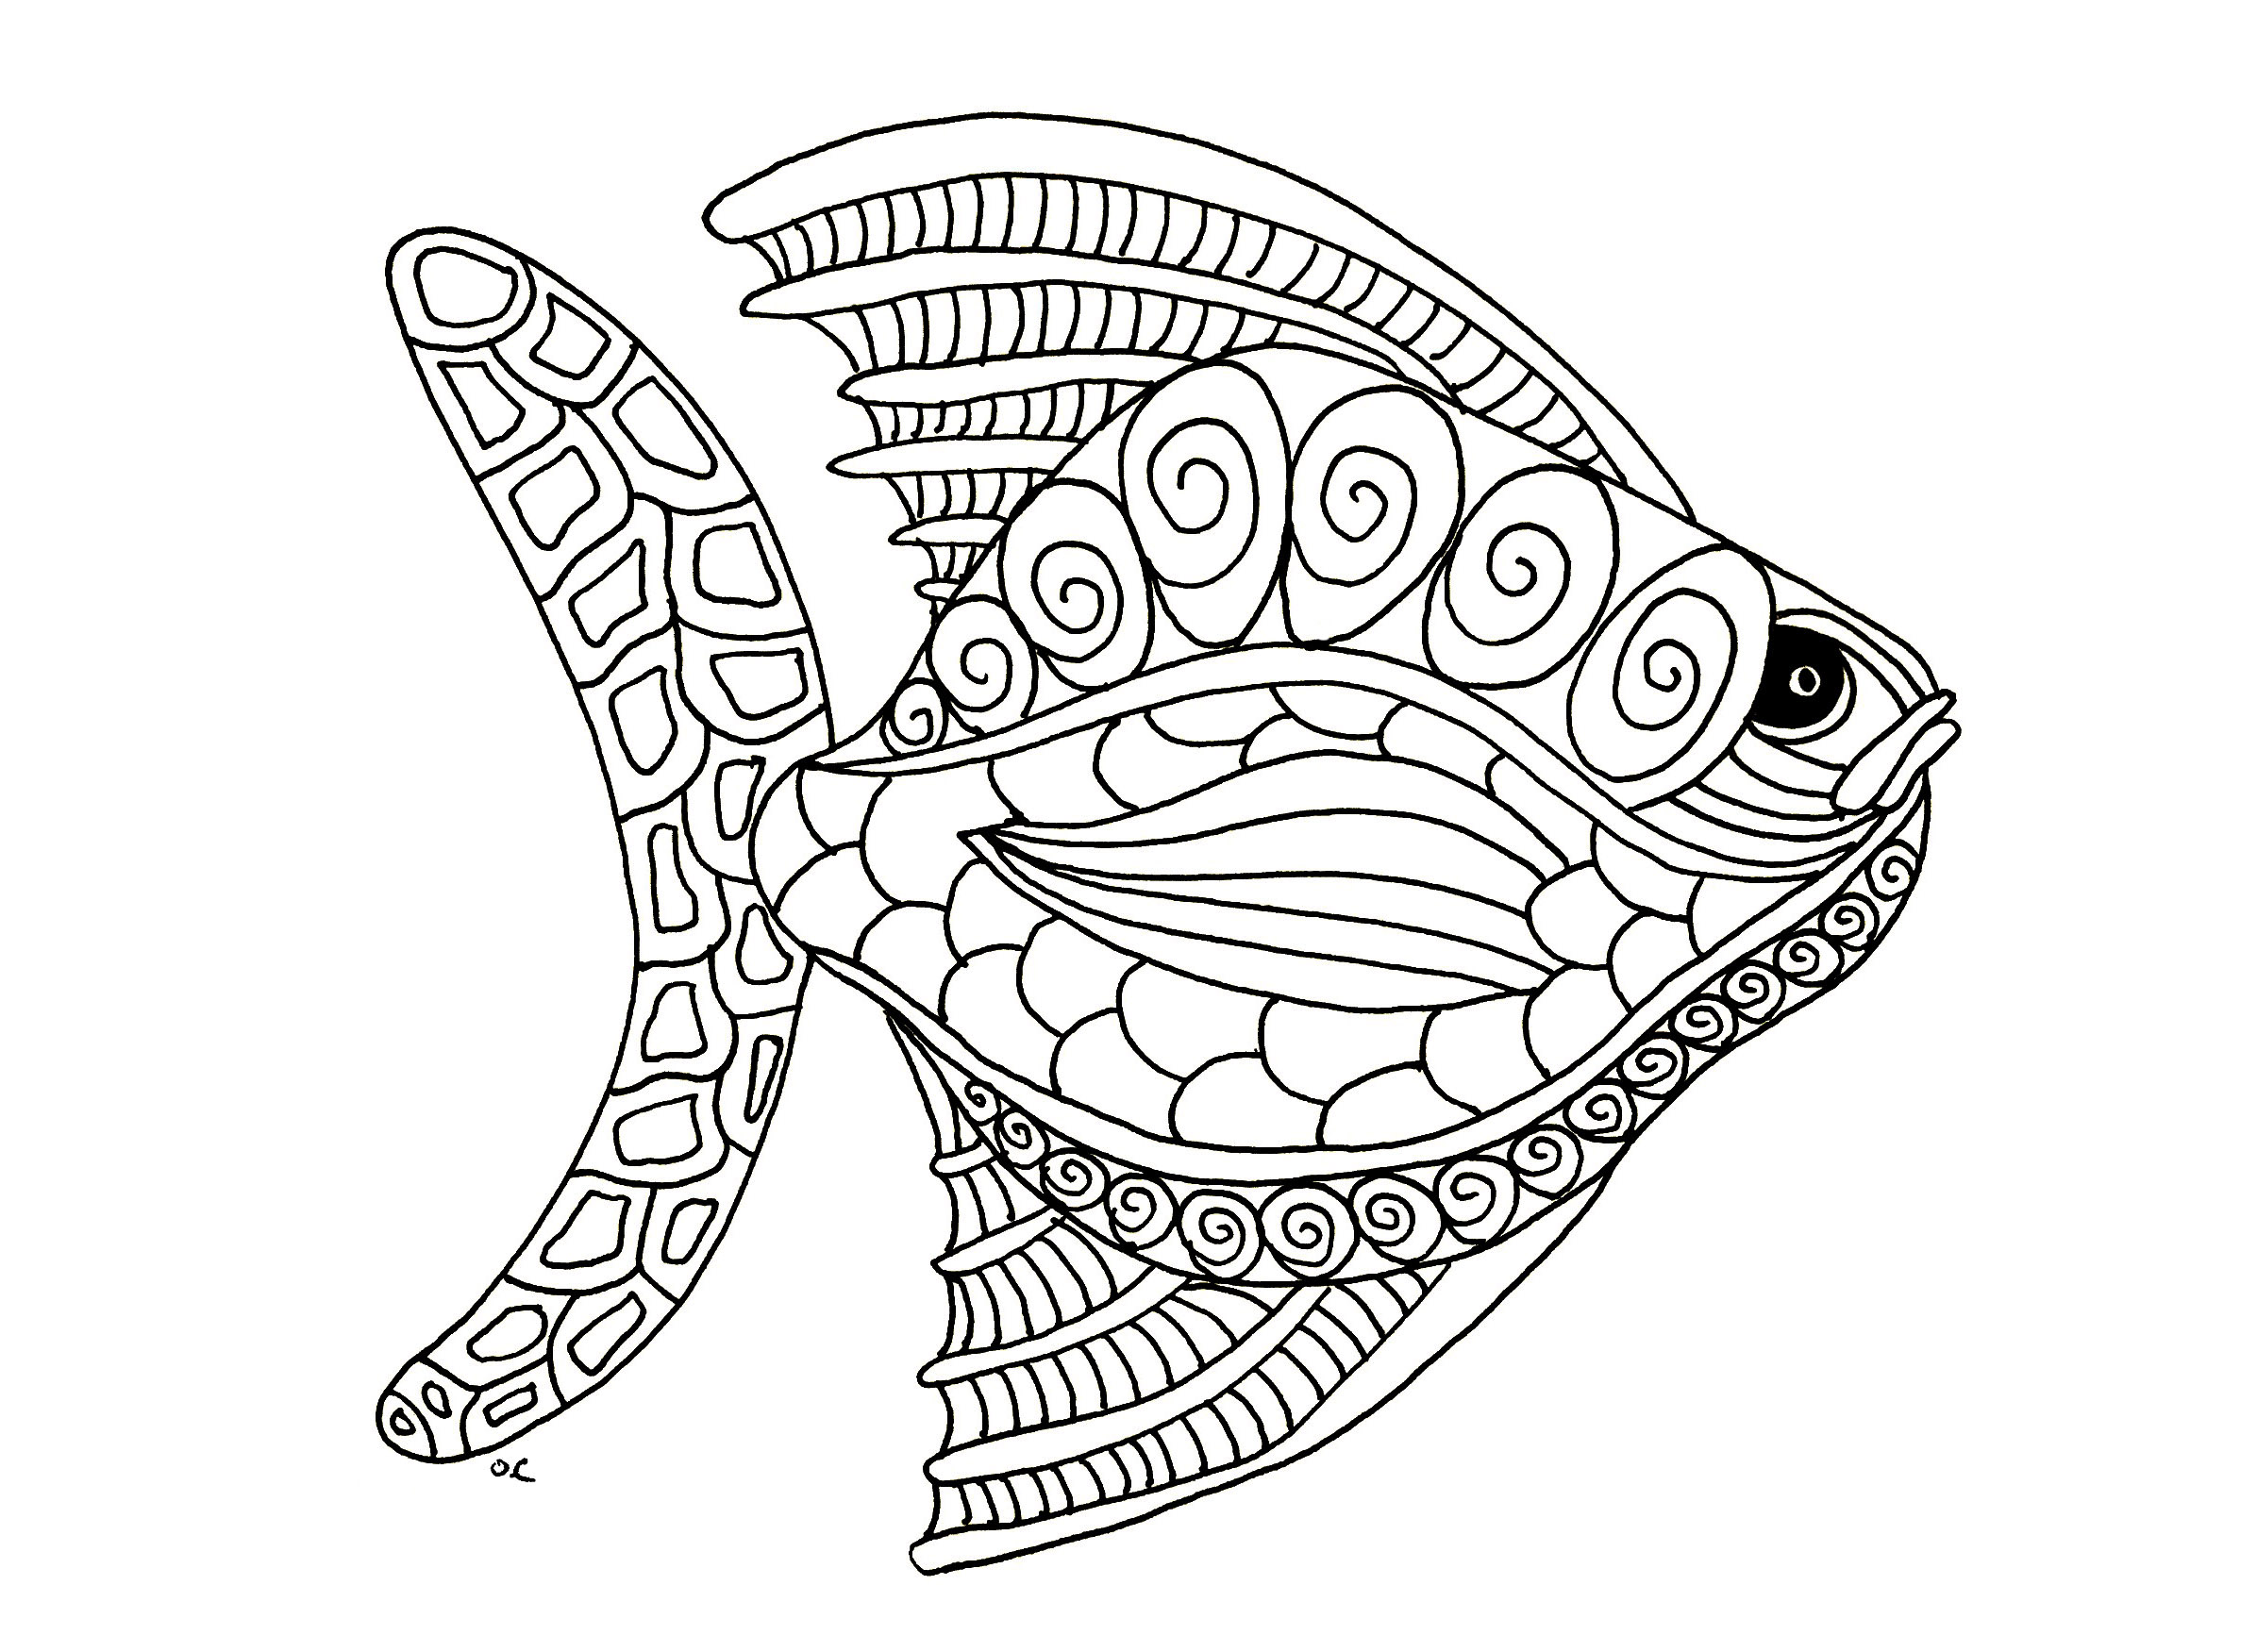 Big fish zentangle style, step 1, Artist : Olivier